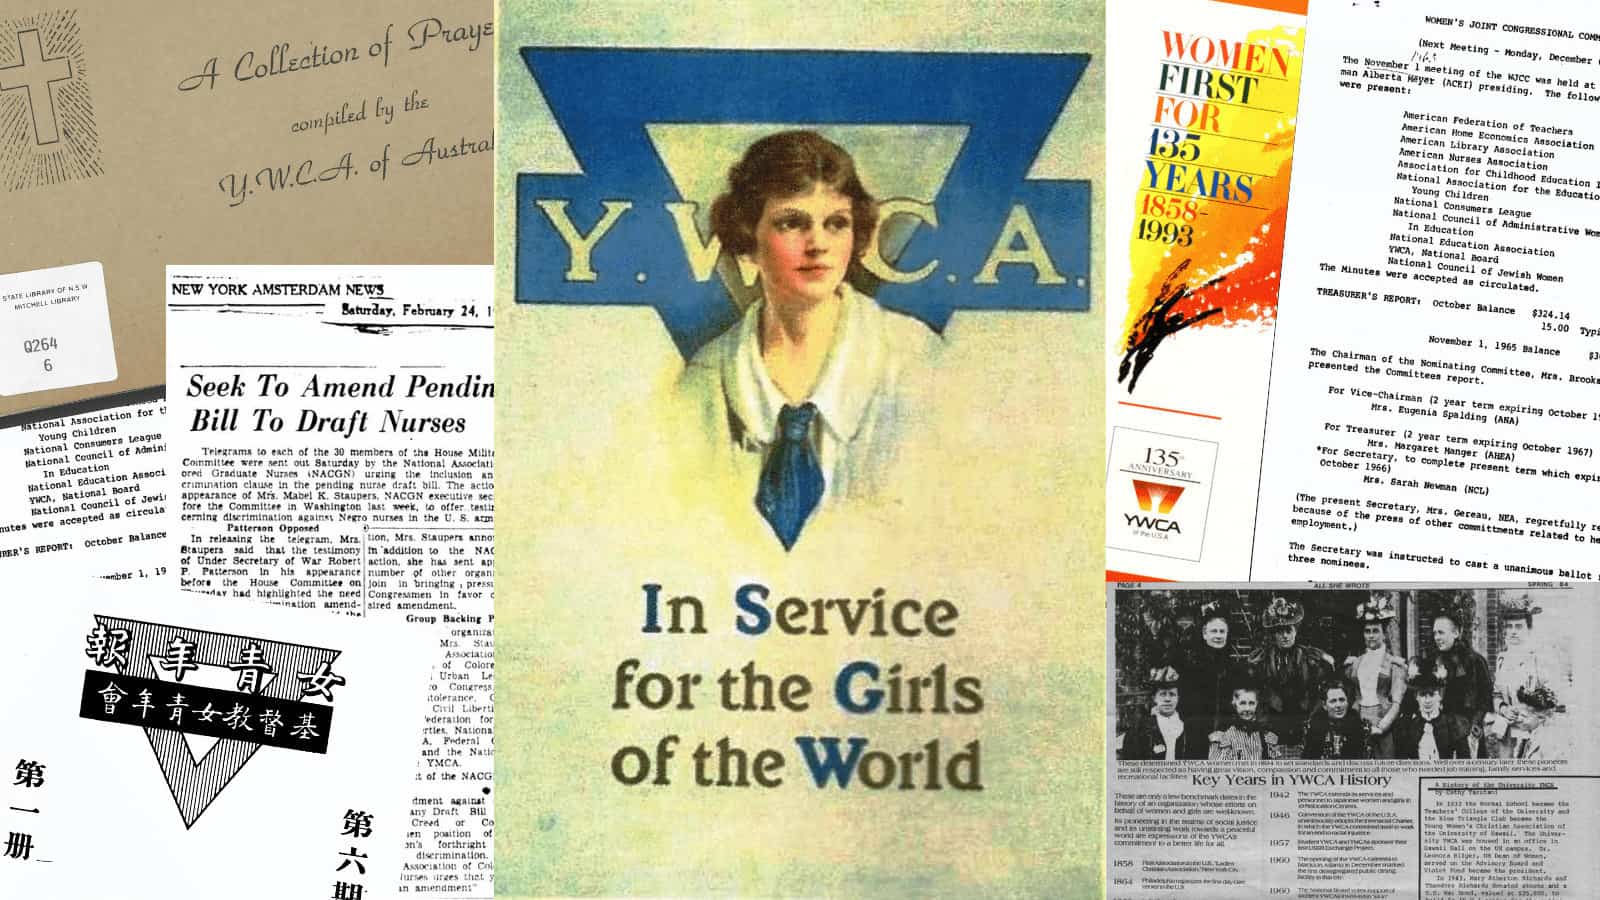 YWCA in Gale's Womens's Studies Archive